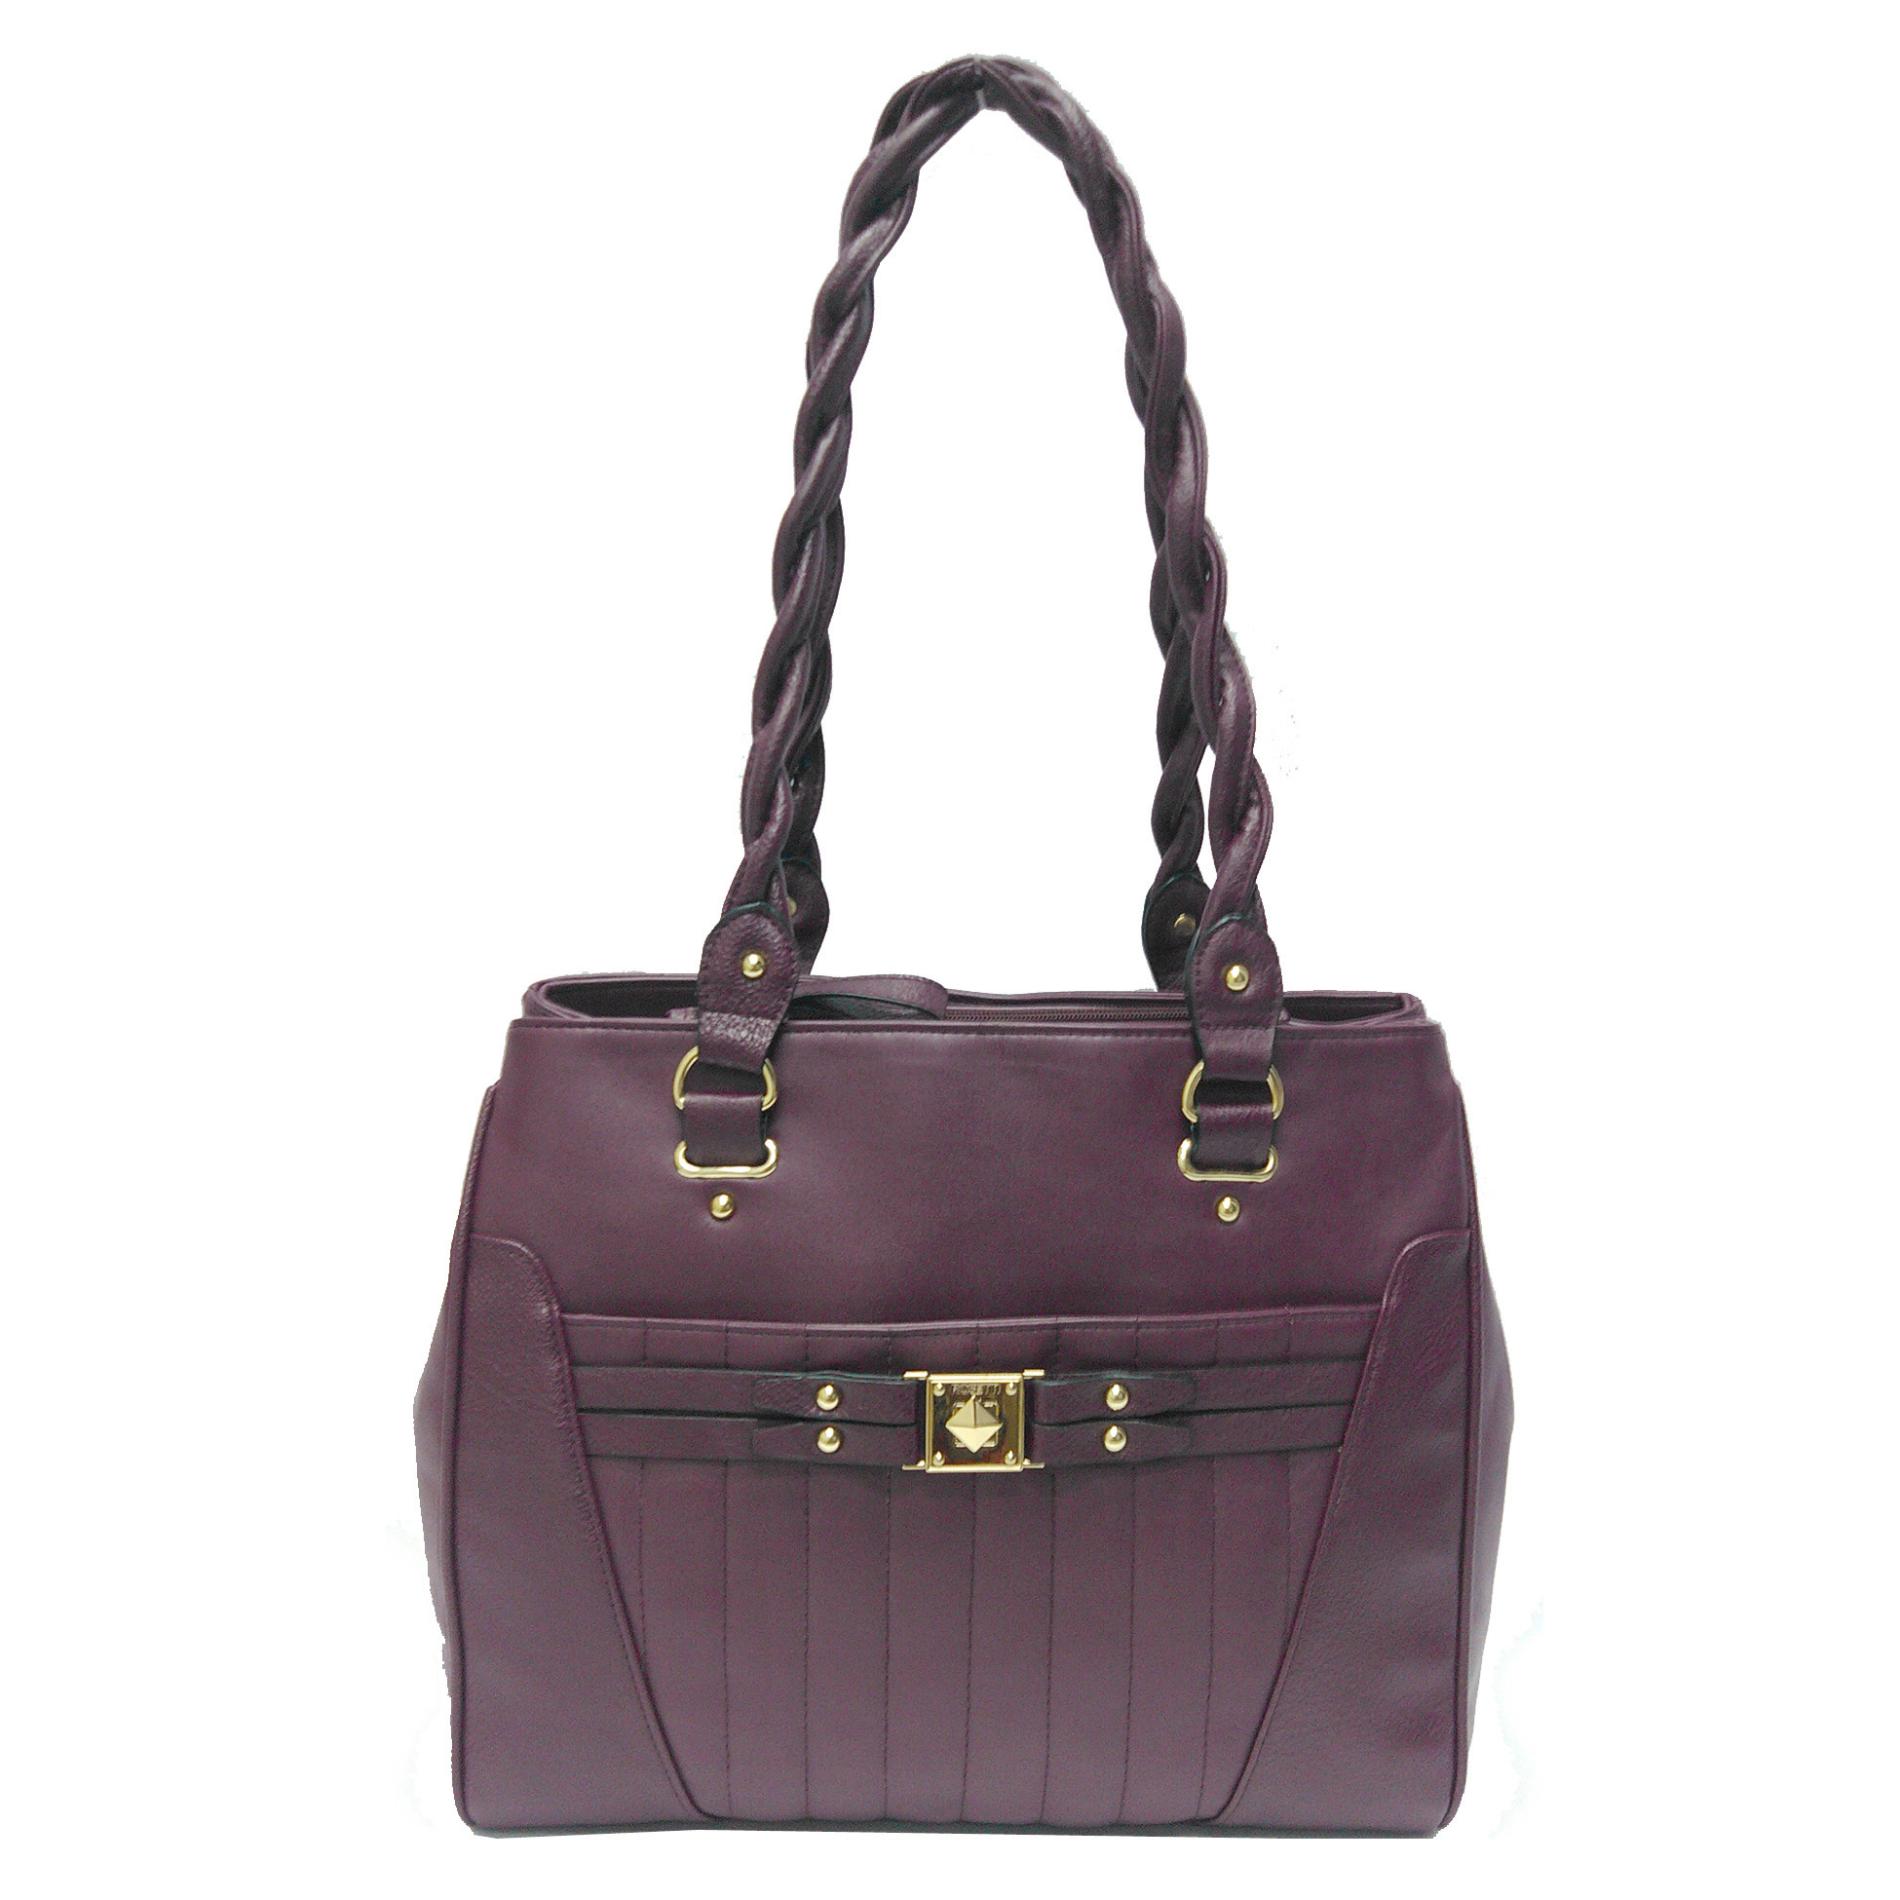 Rosetti Women's Place Your Belts Shopper Bag